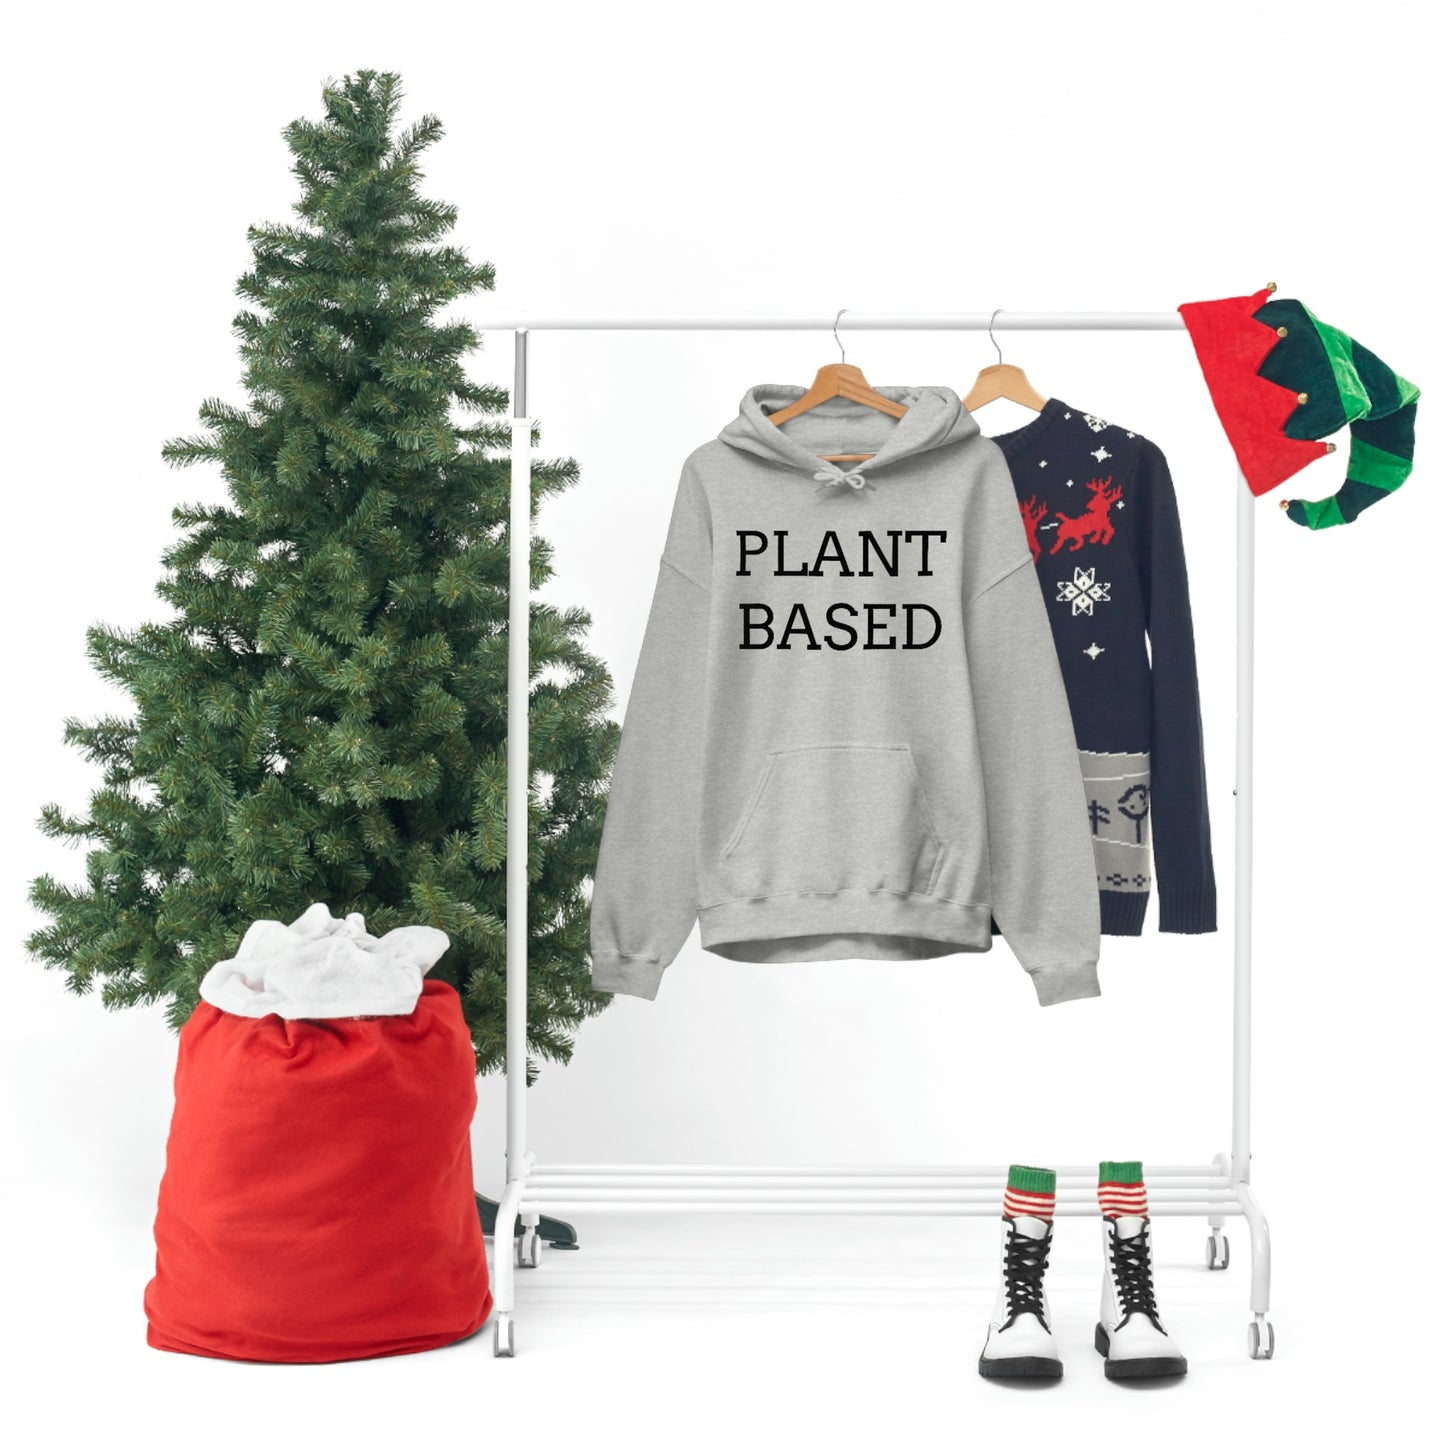 Plant Based, Hooded Sweatshirt